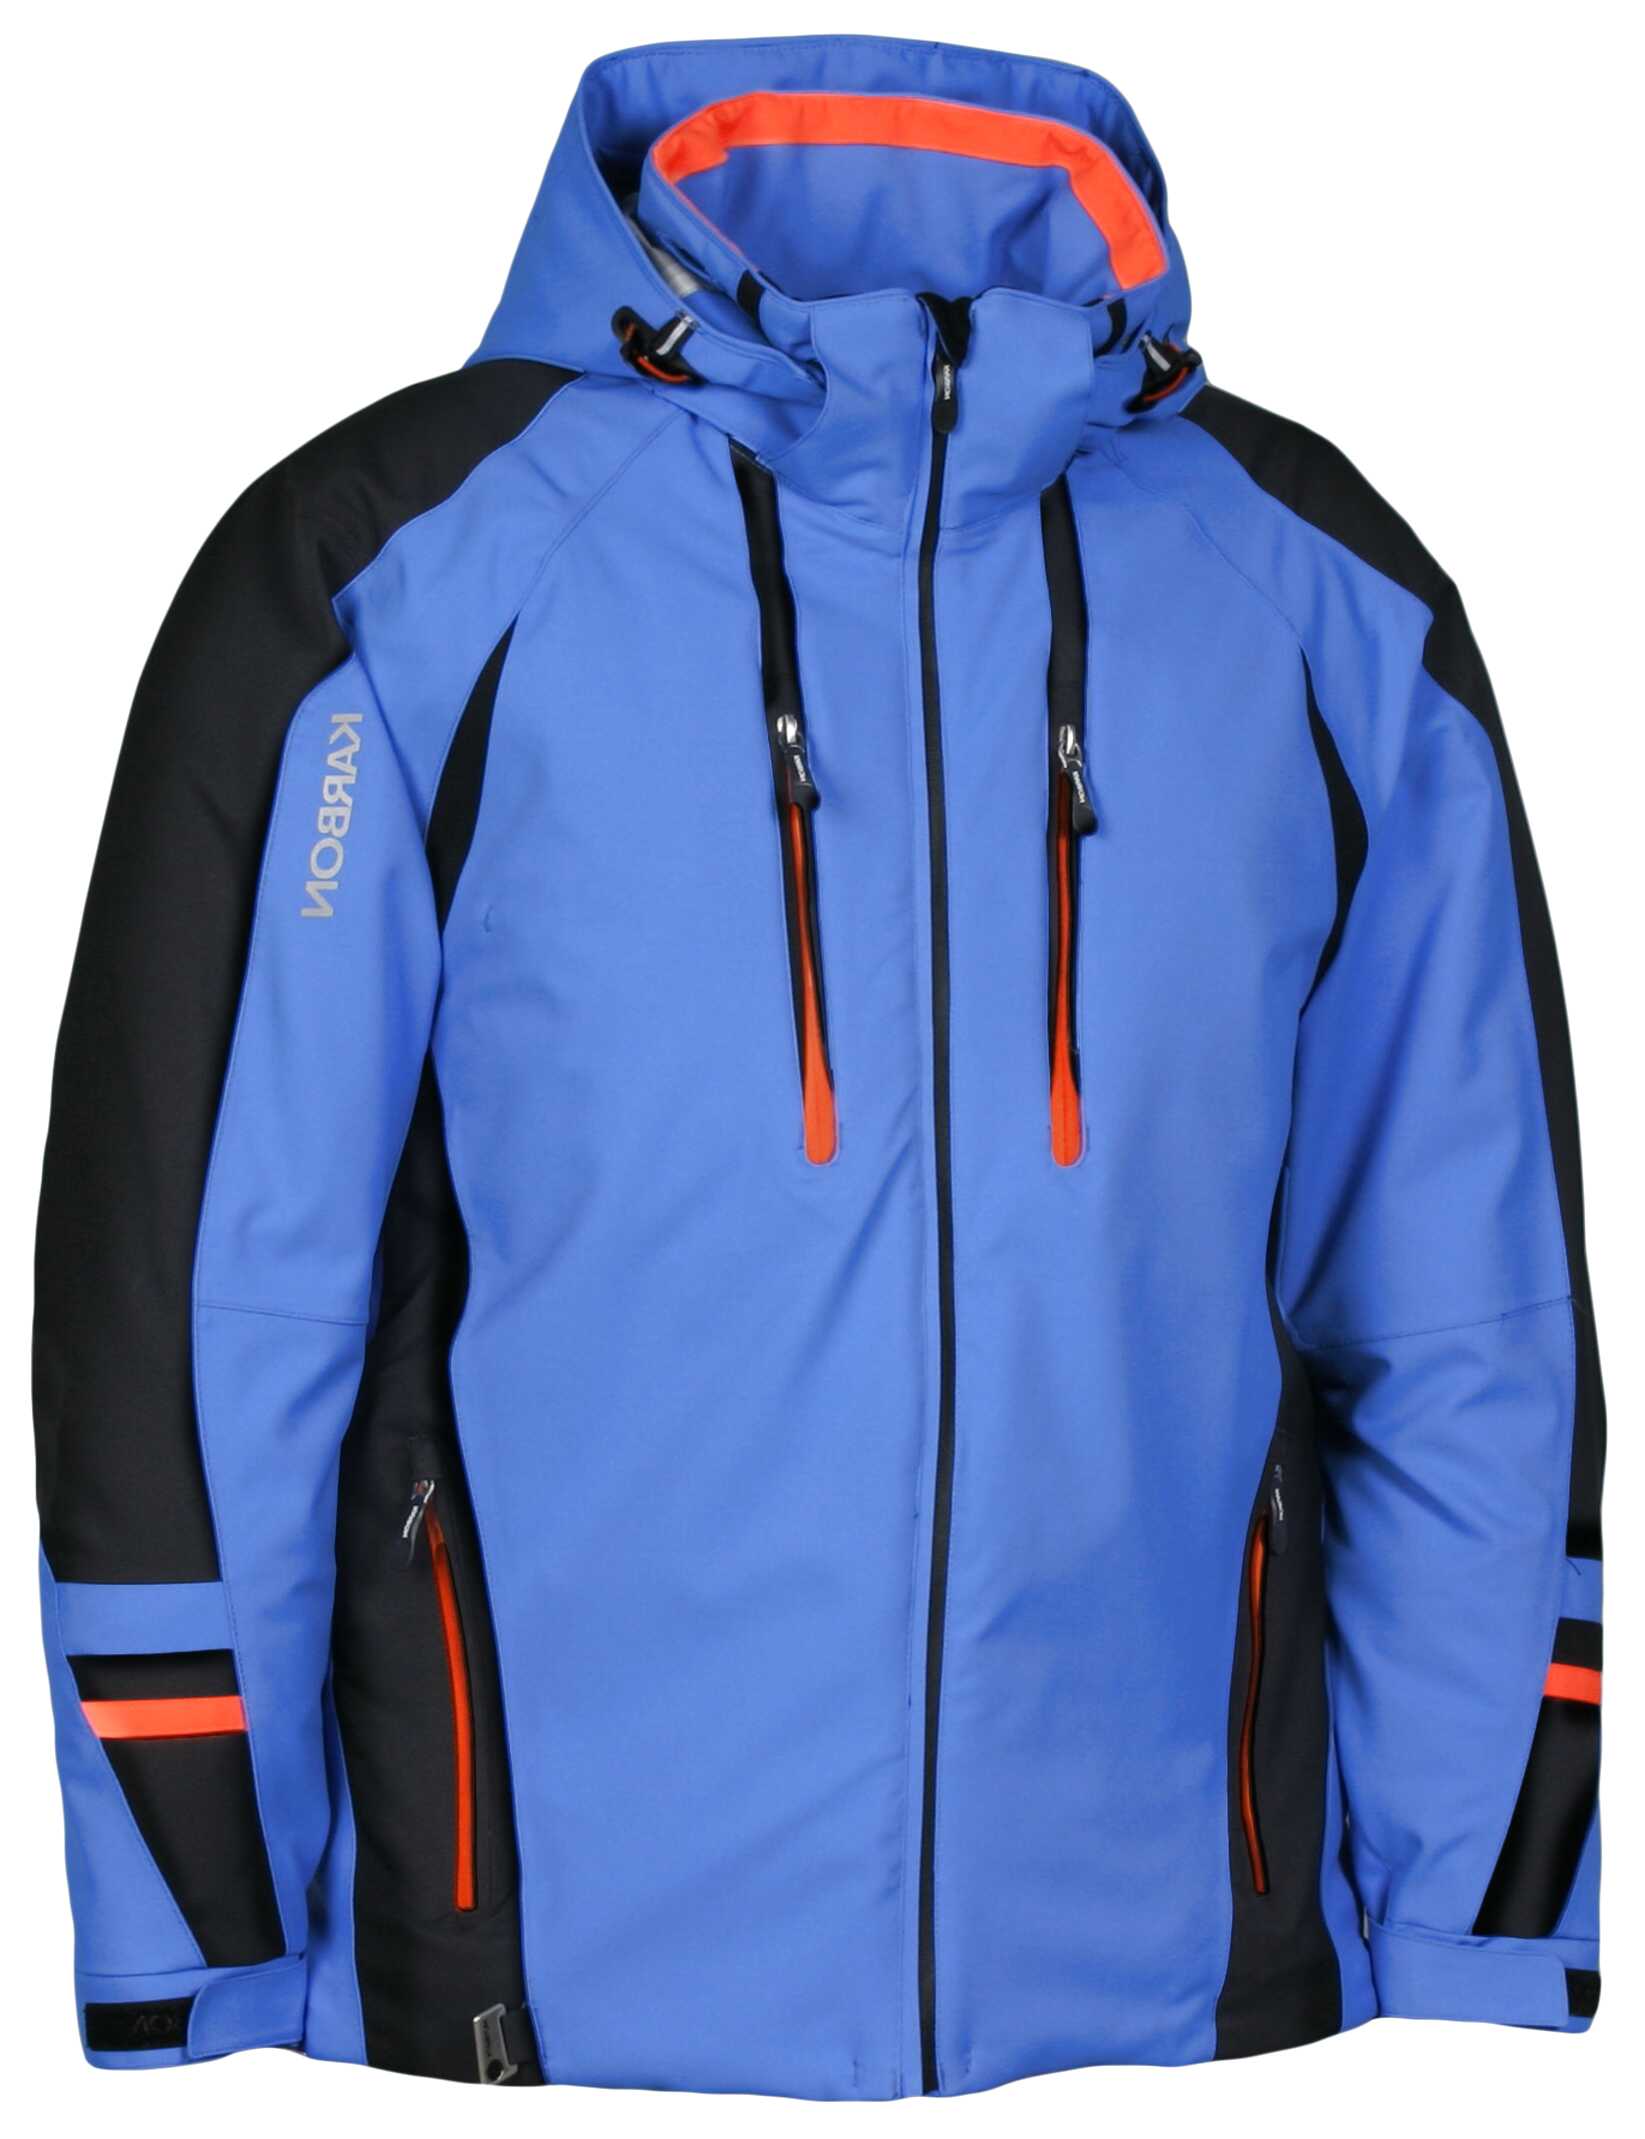 Mens Ski Jacket for sale in UK 82 used Mens Ski Jackets